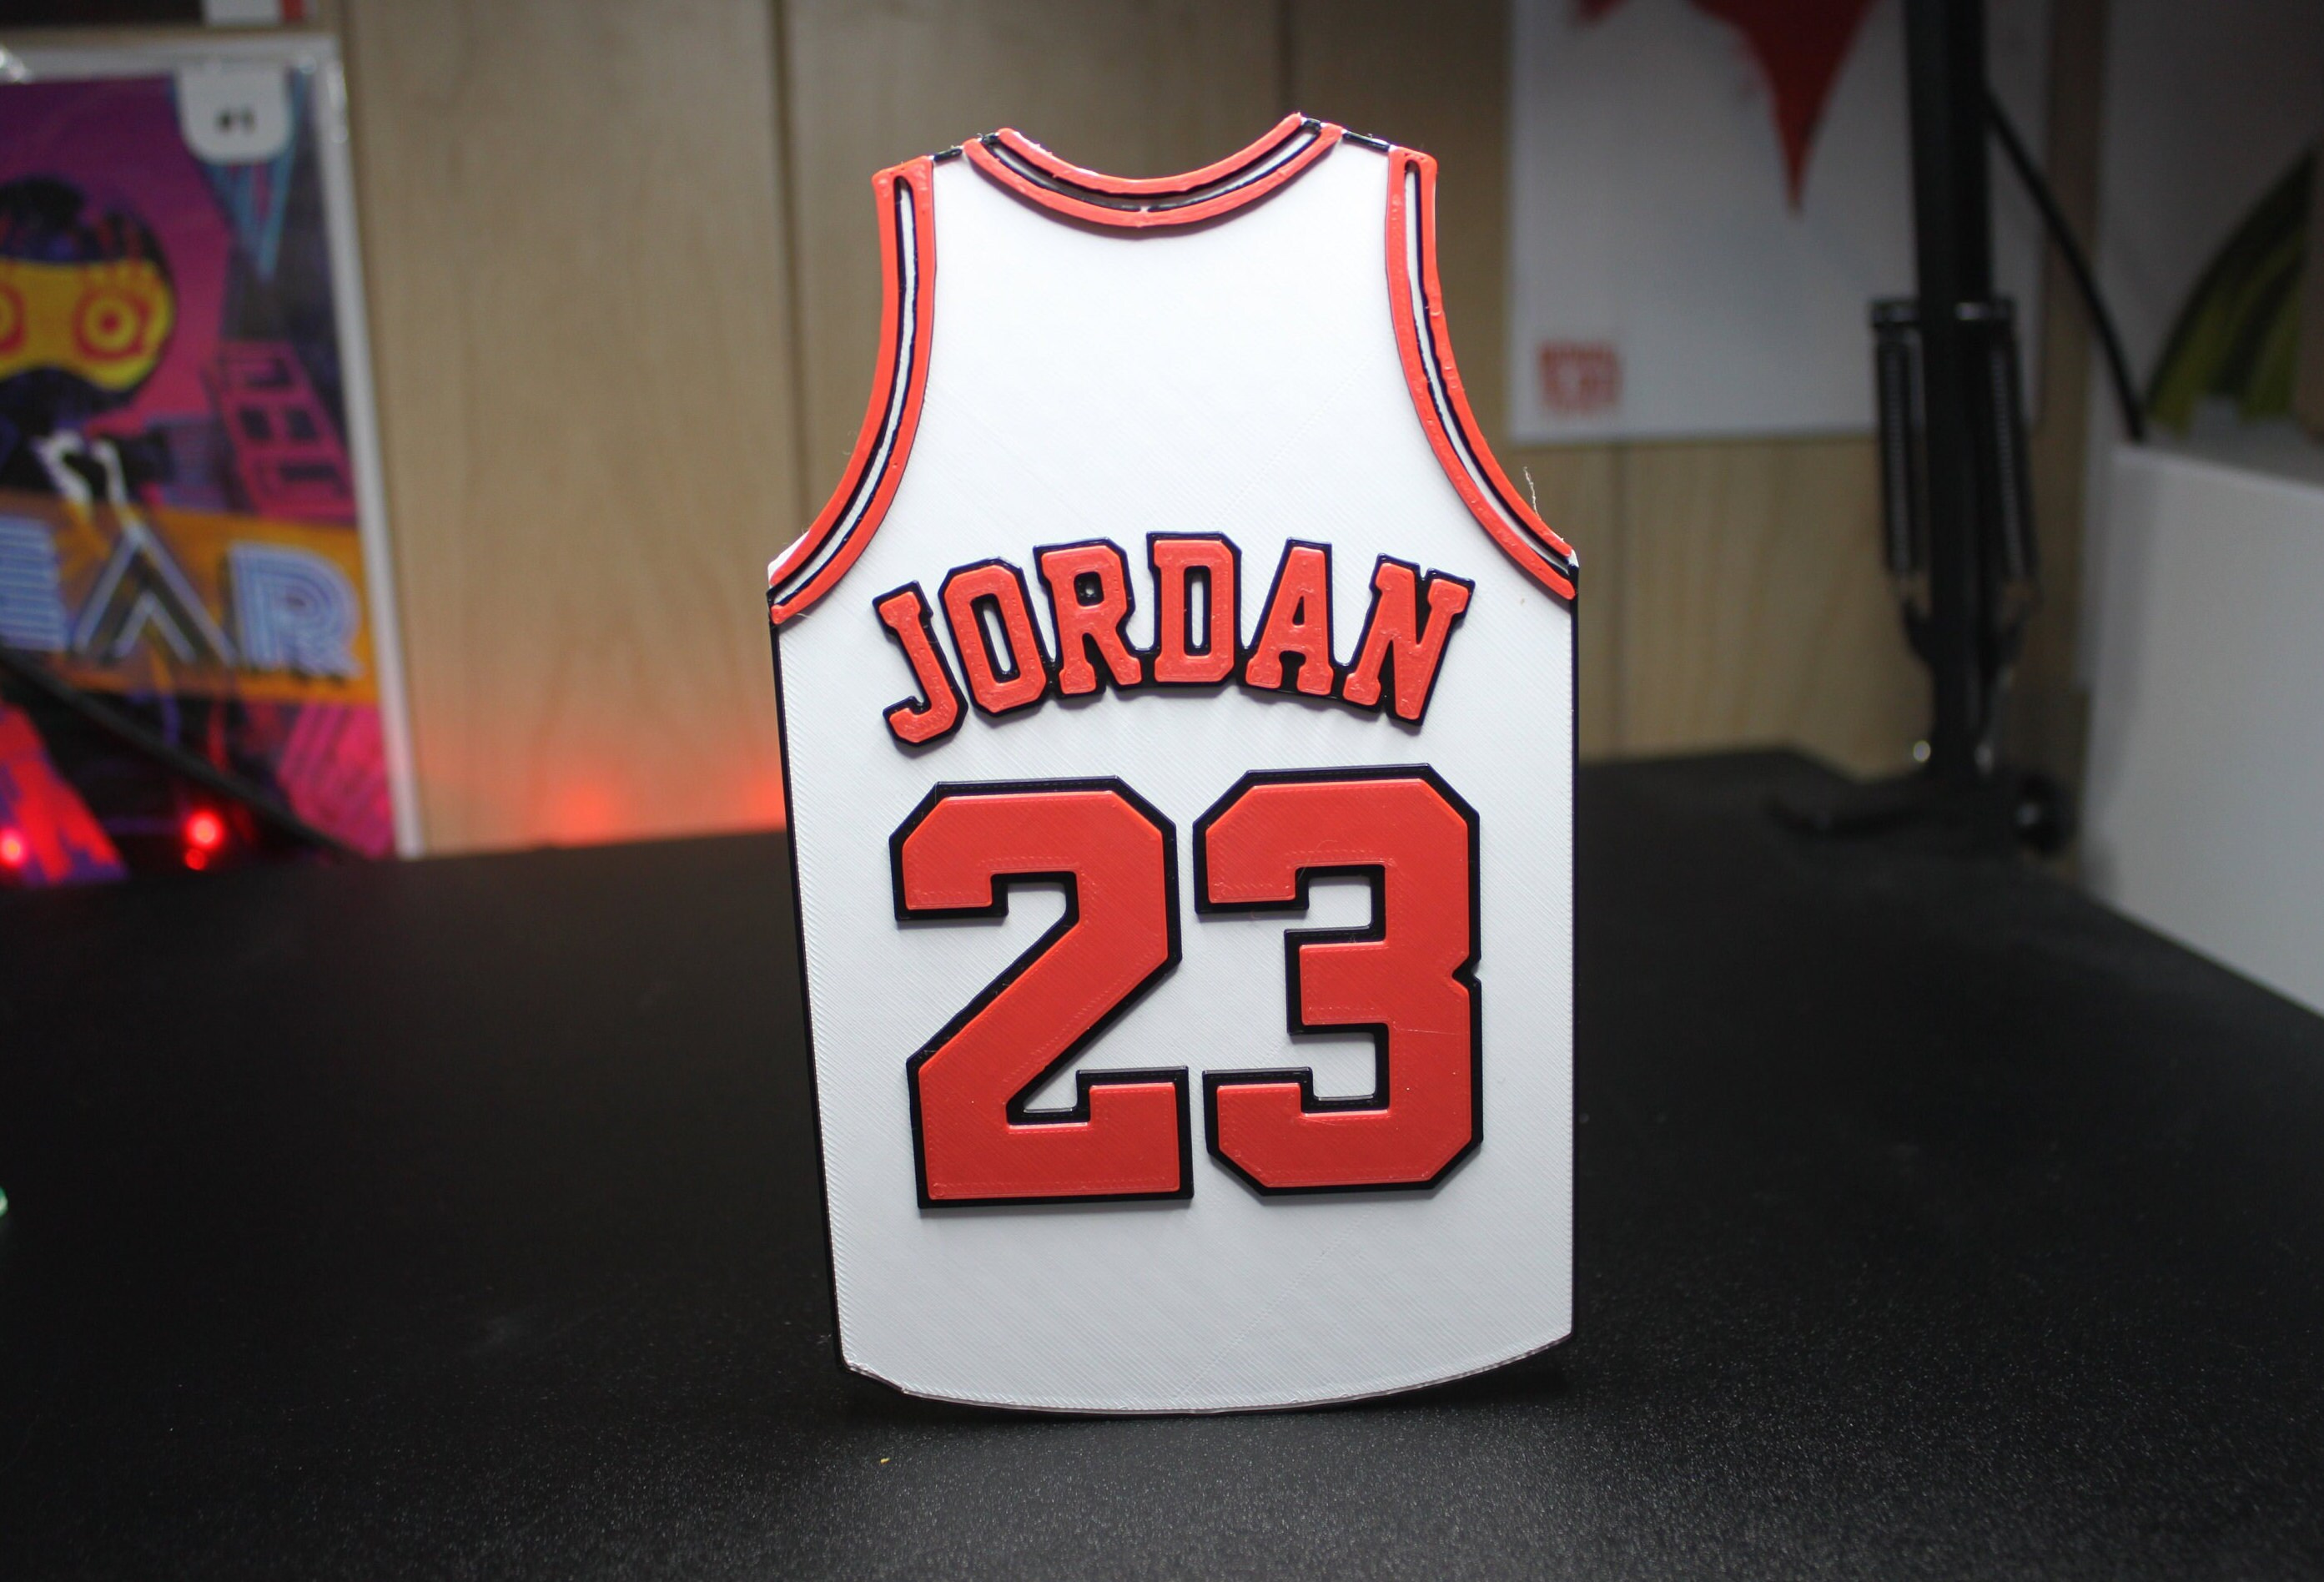  Jordan Jersey 23